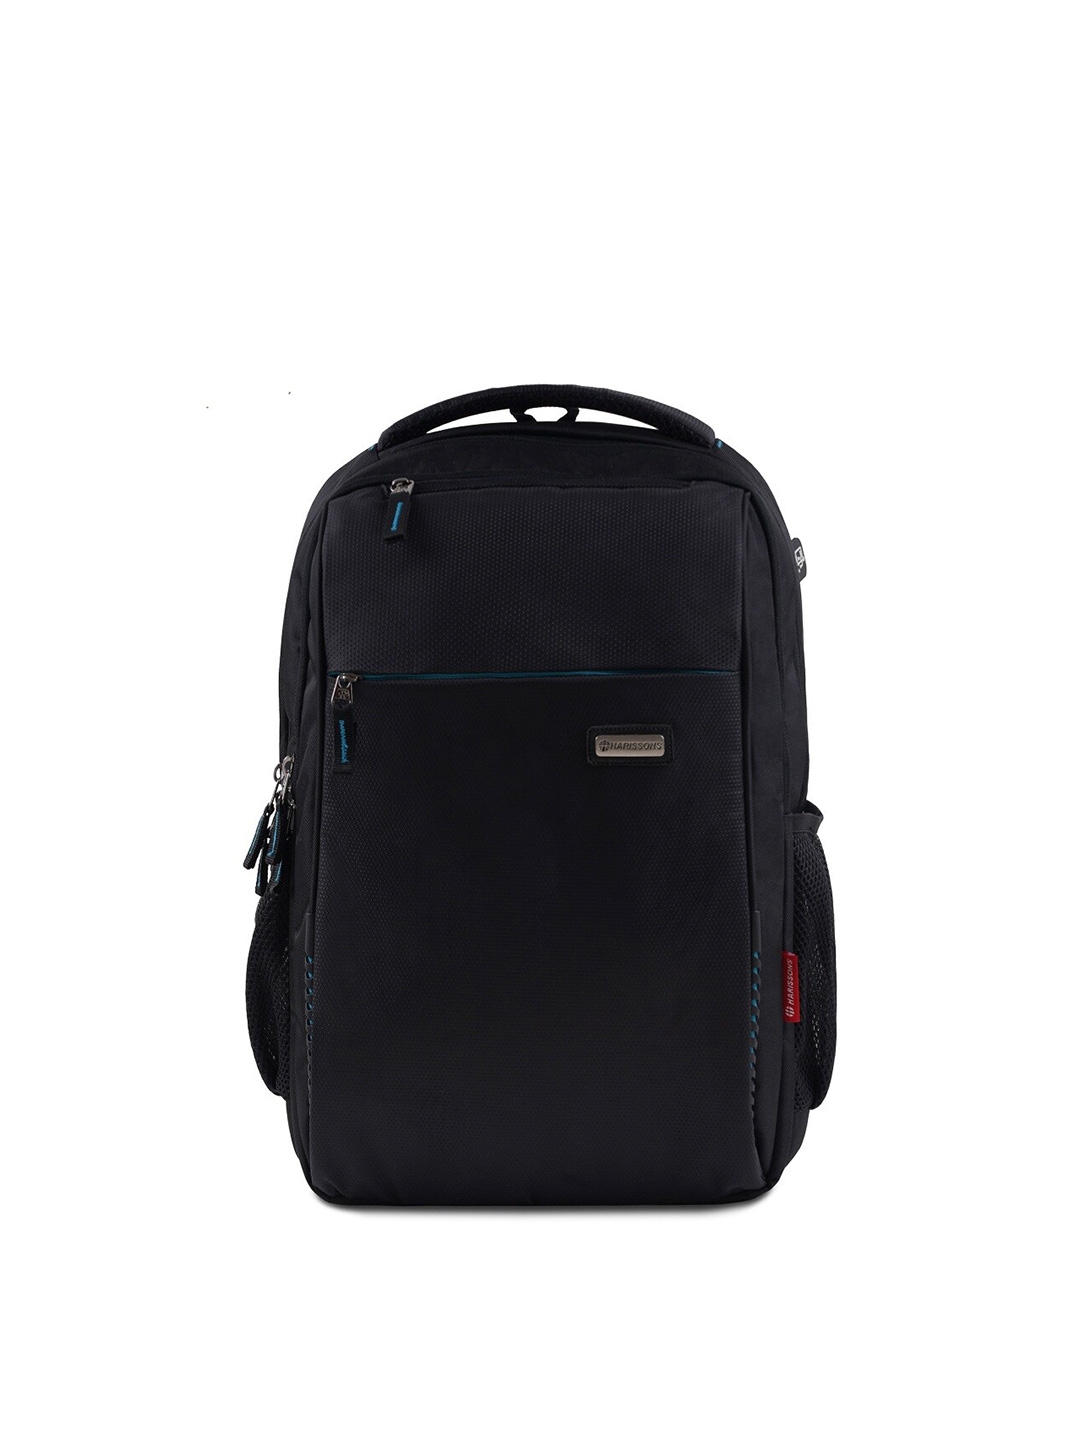 Harissons Unisex Black 15 Inch Laptop Bag